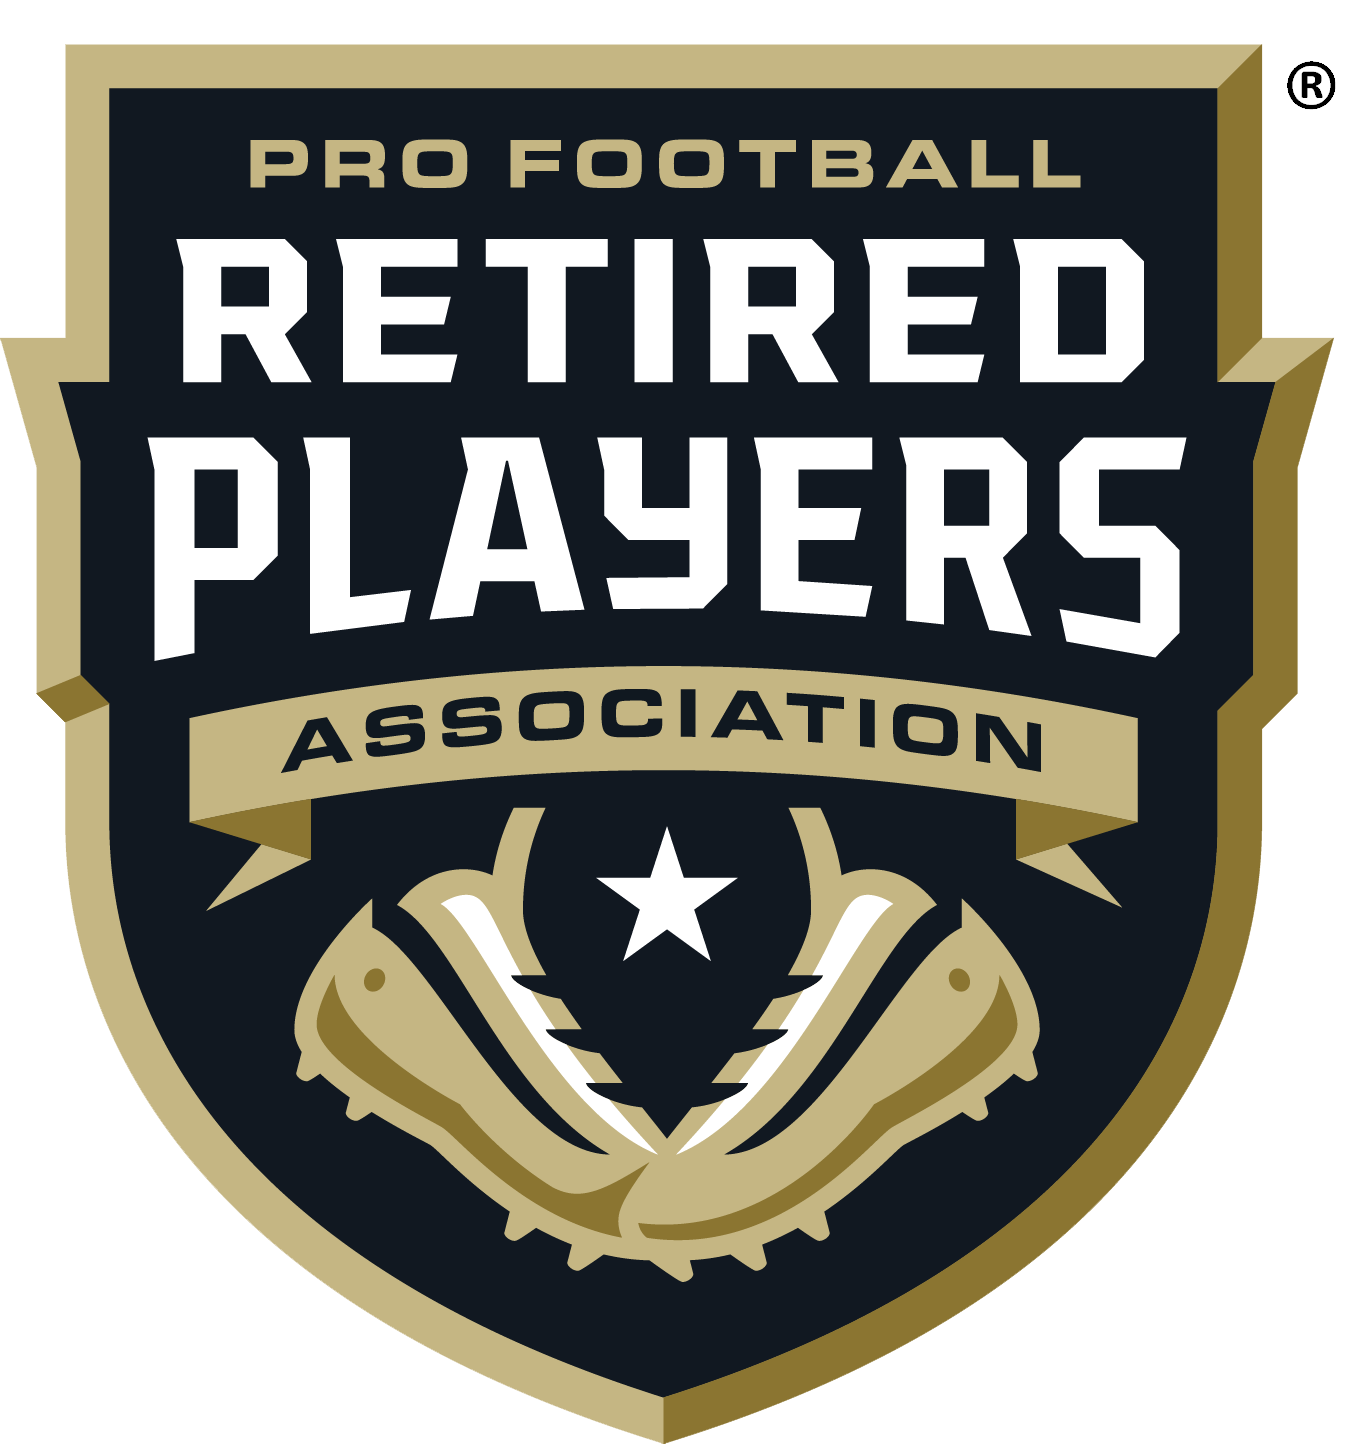 Pro Football Retired Players Association